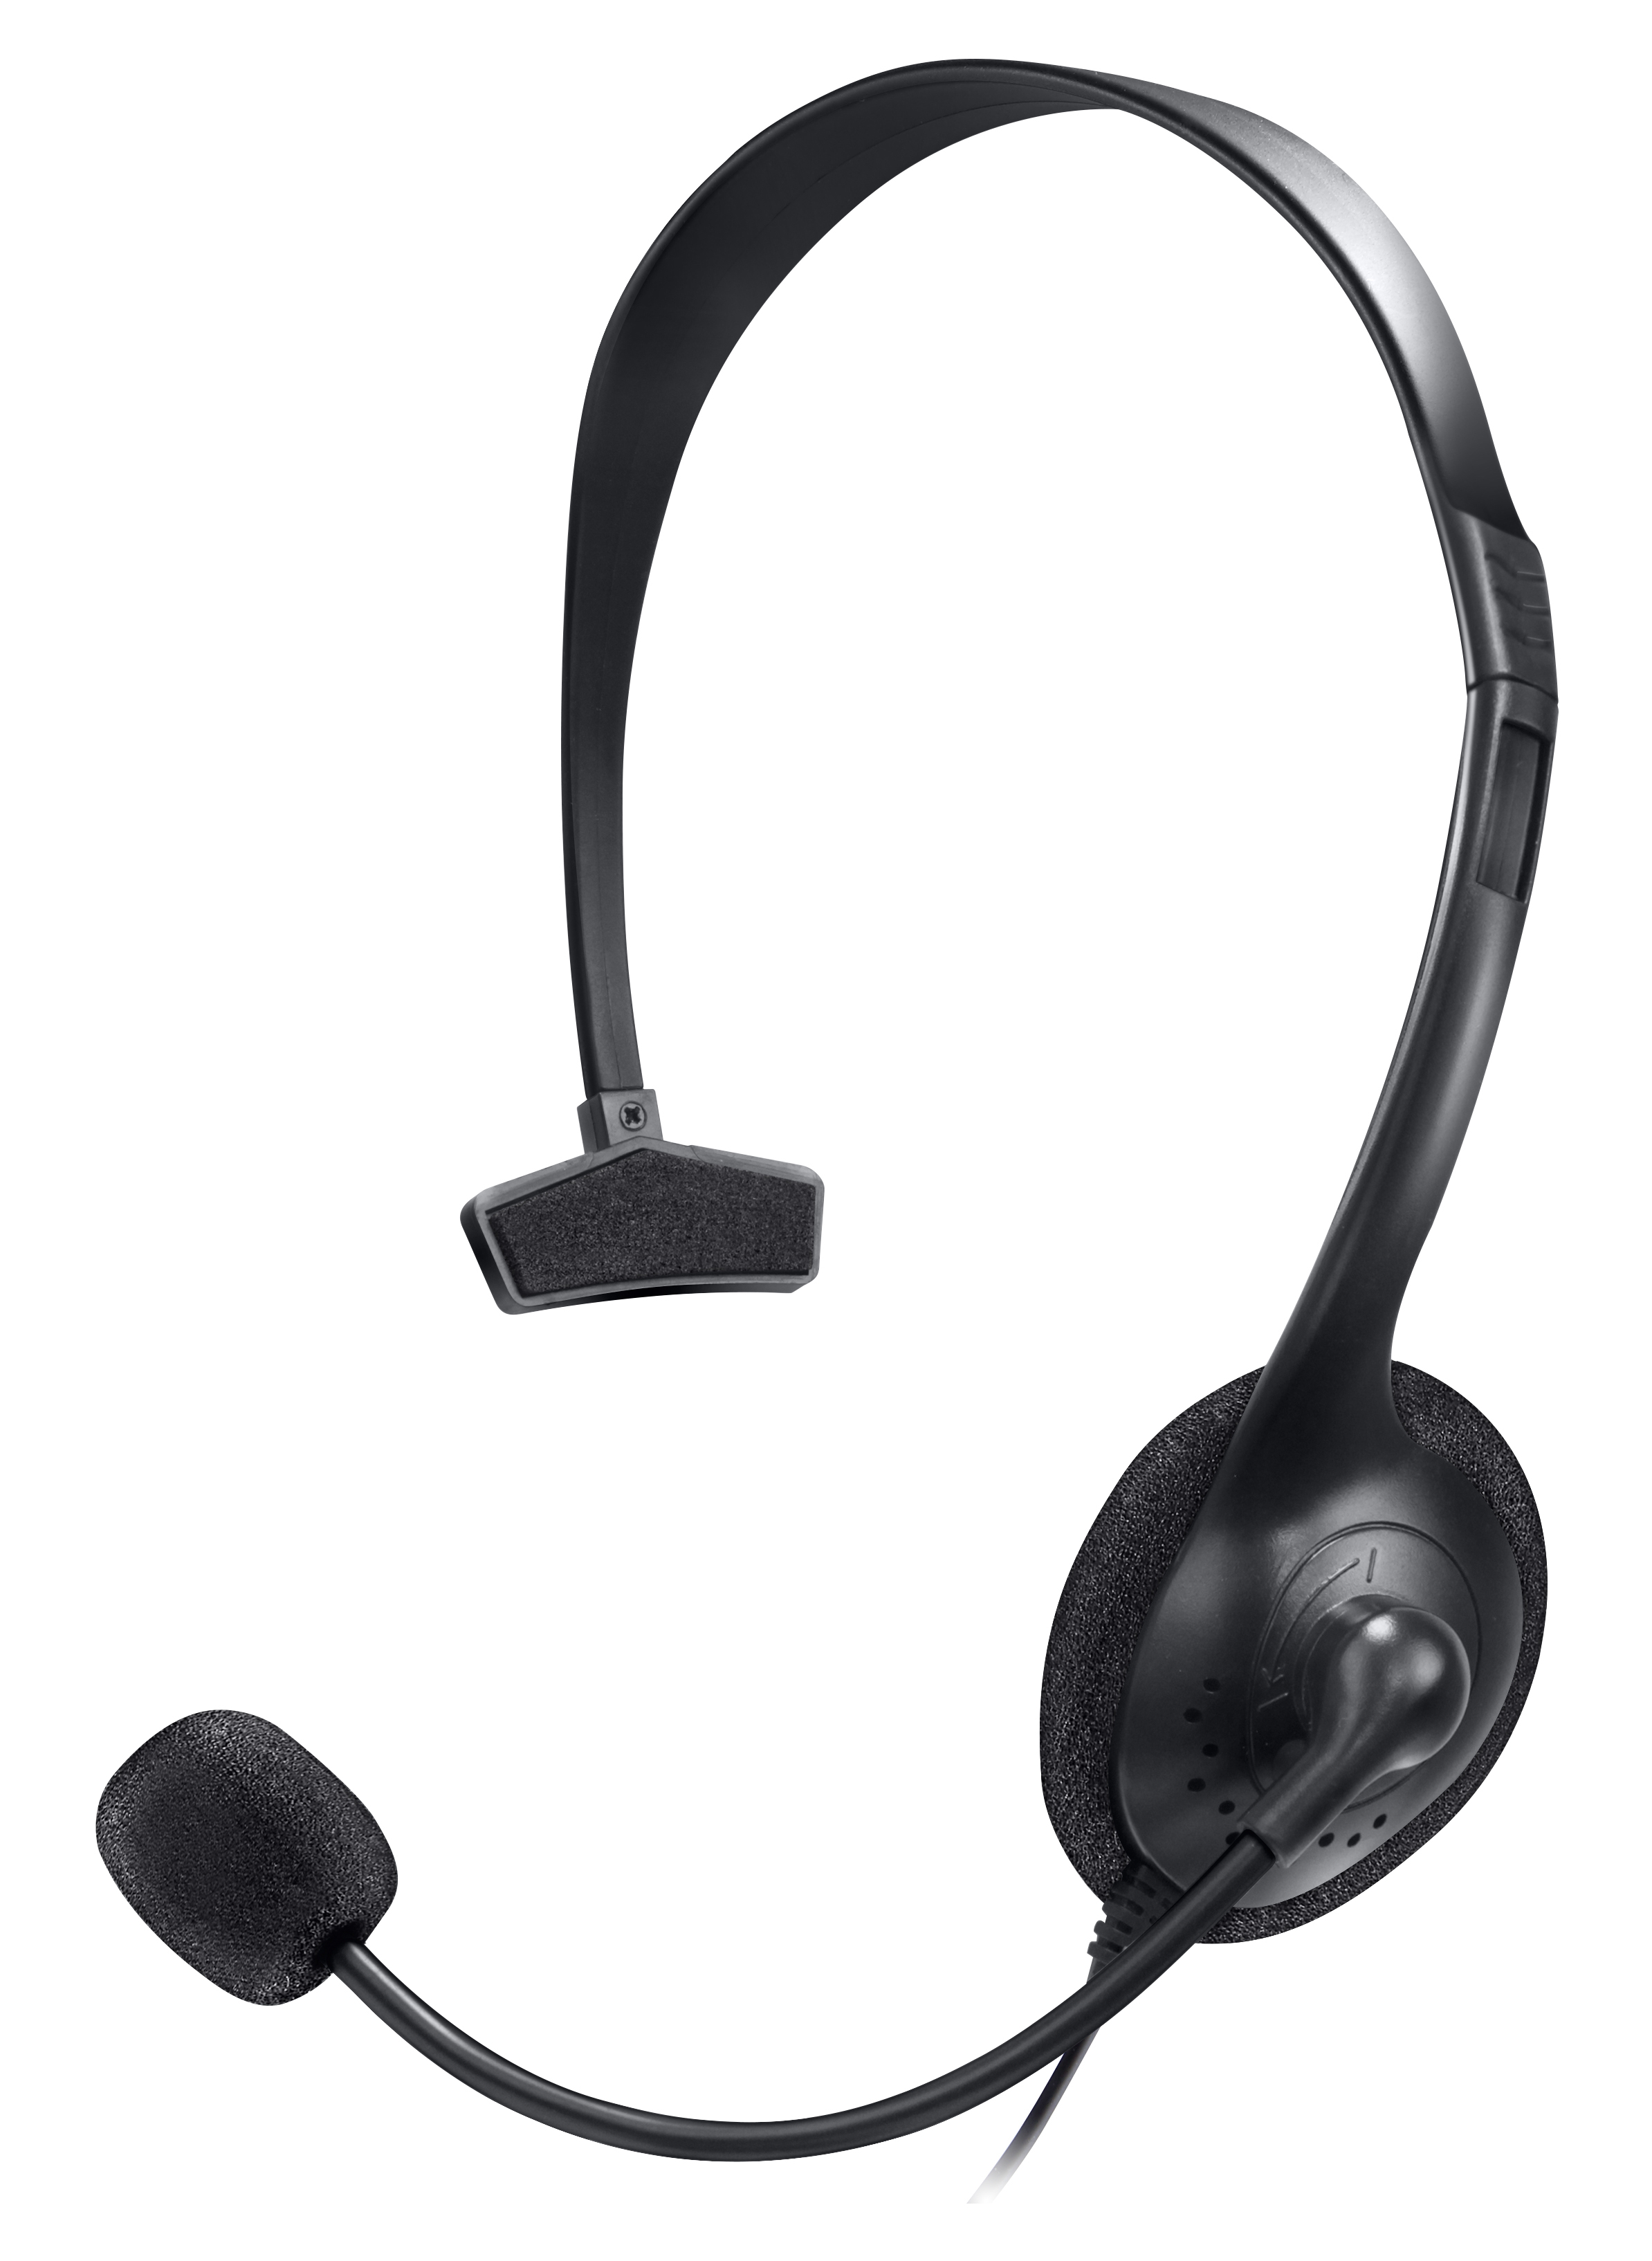 BigBen Comfortabele gaming headset voor PlayStation 4